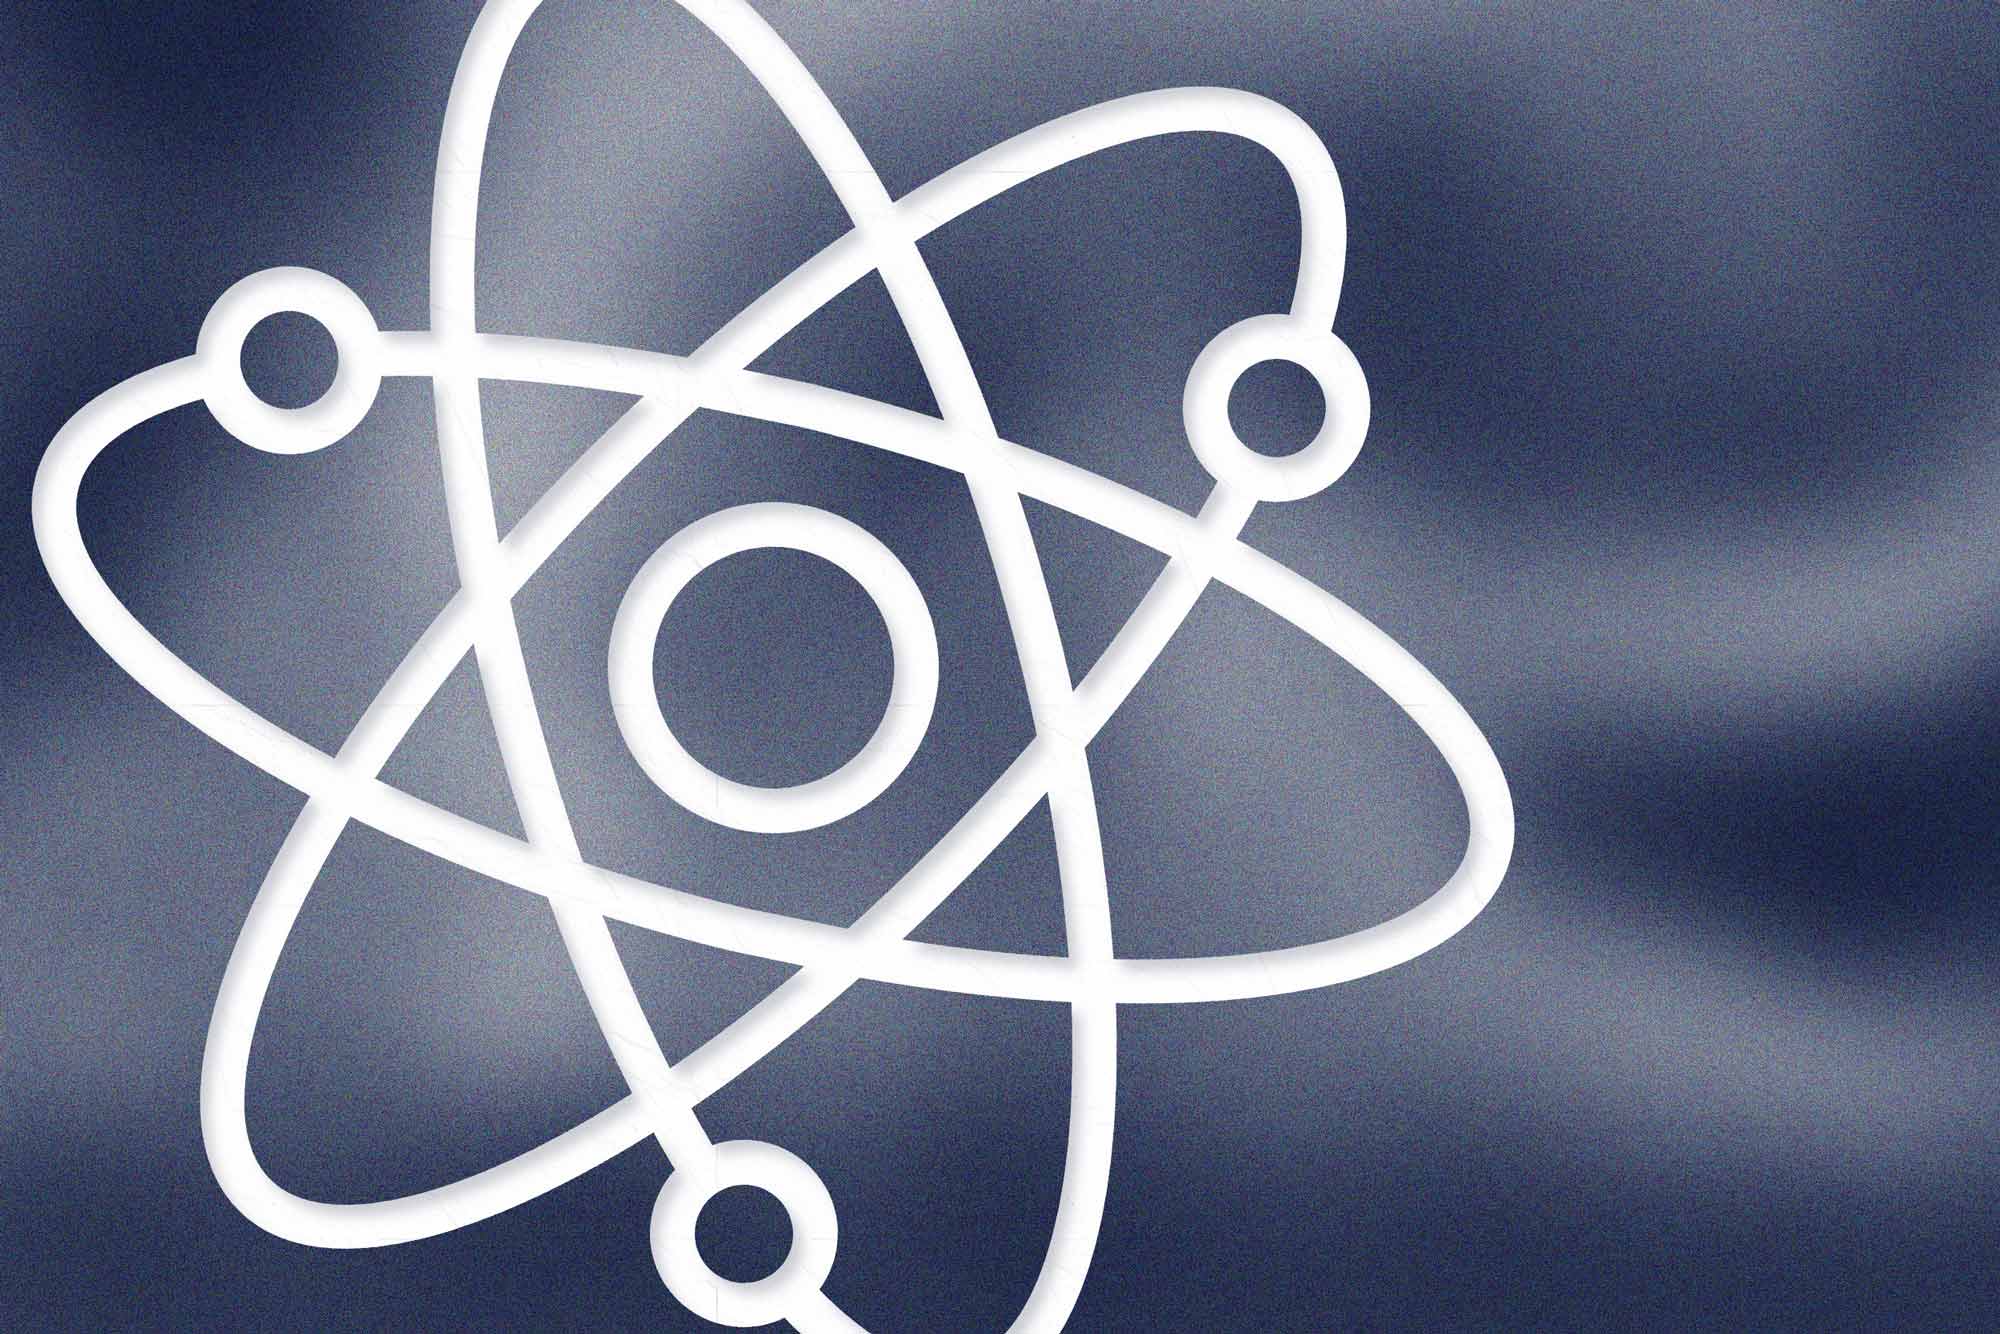 Illustration of an Atom